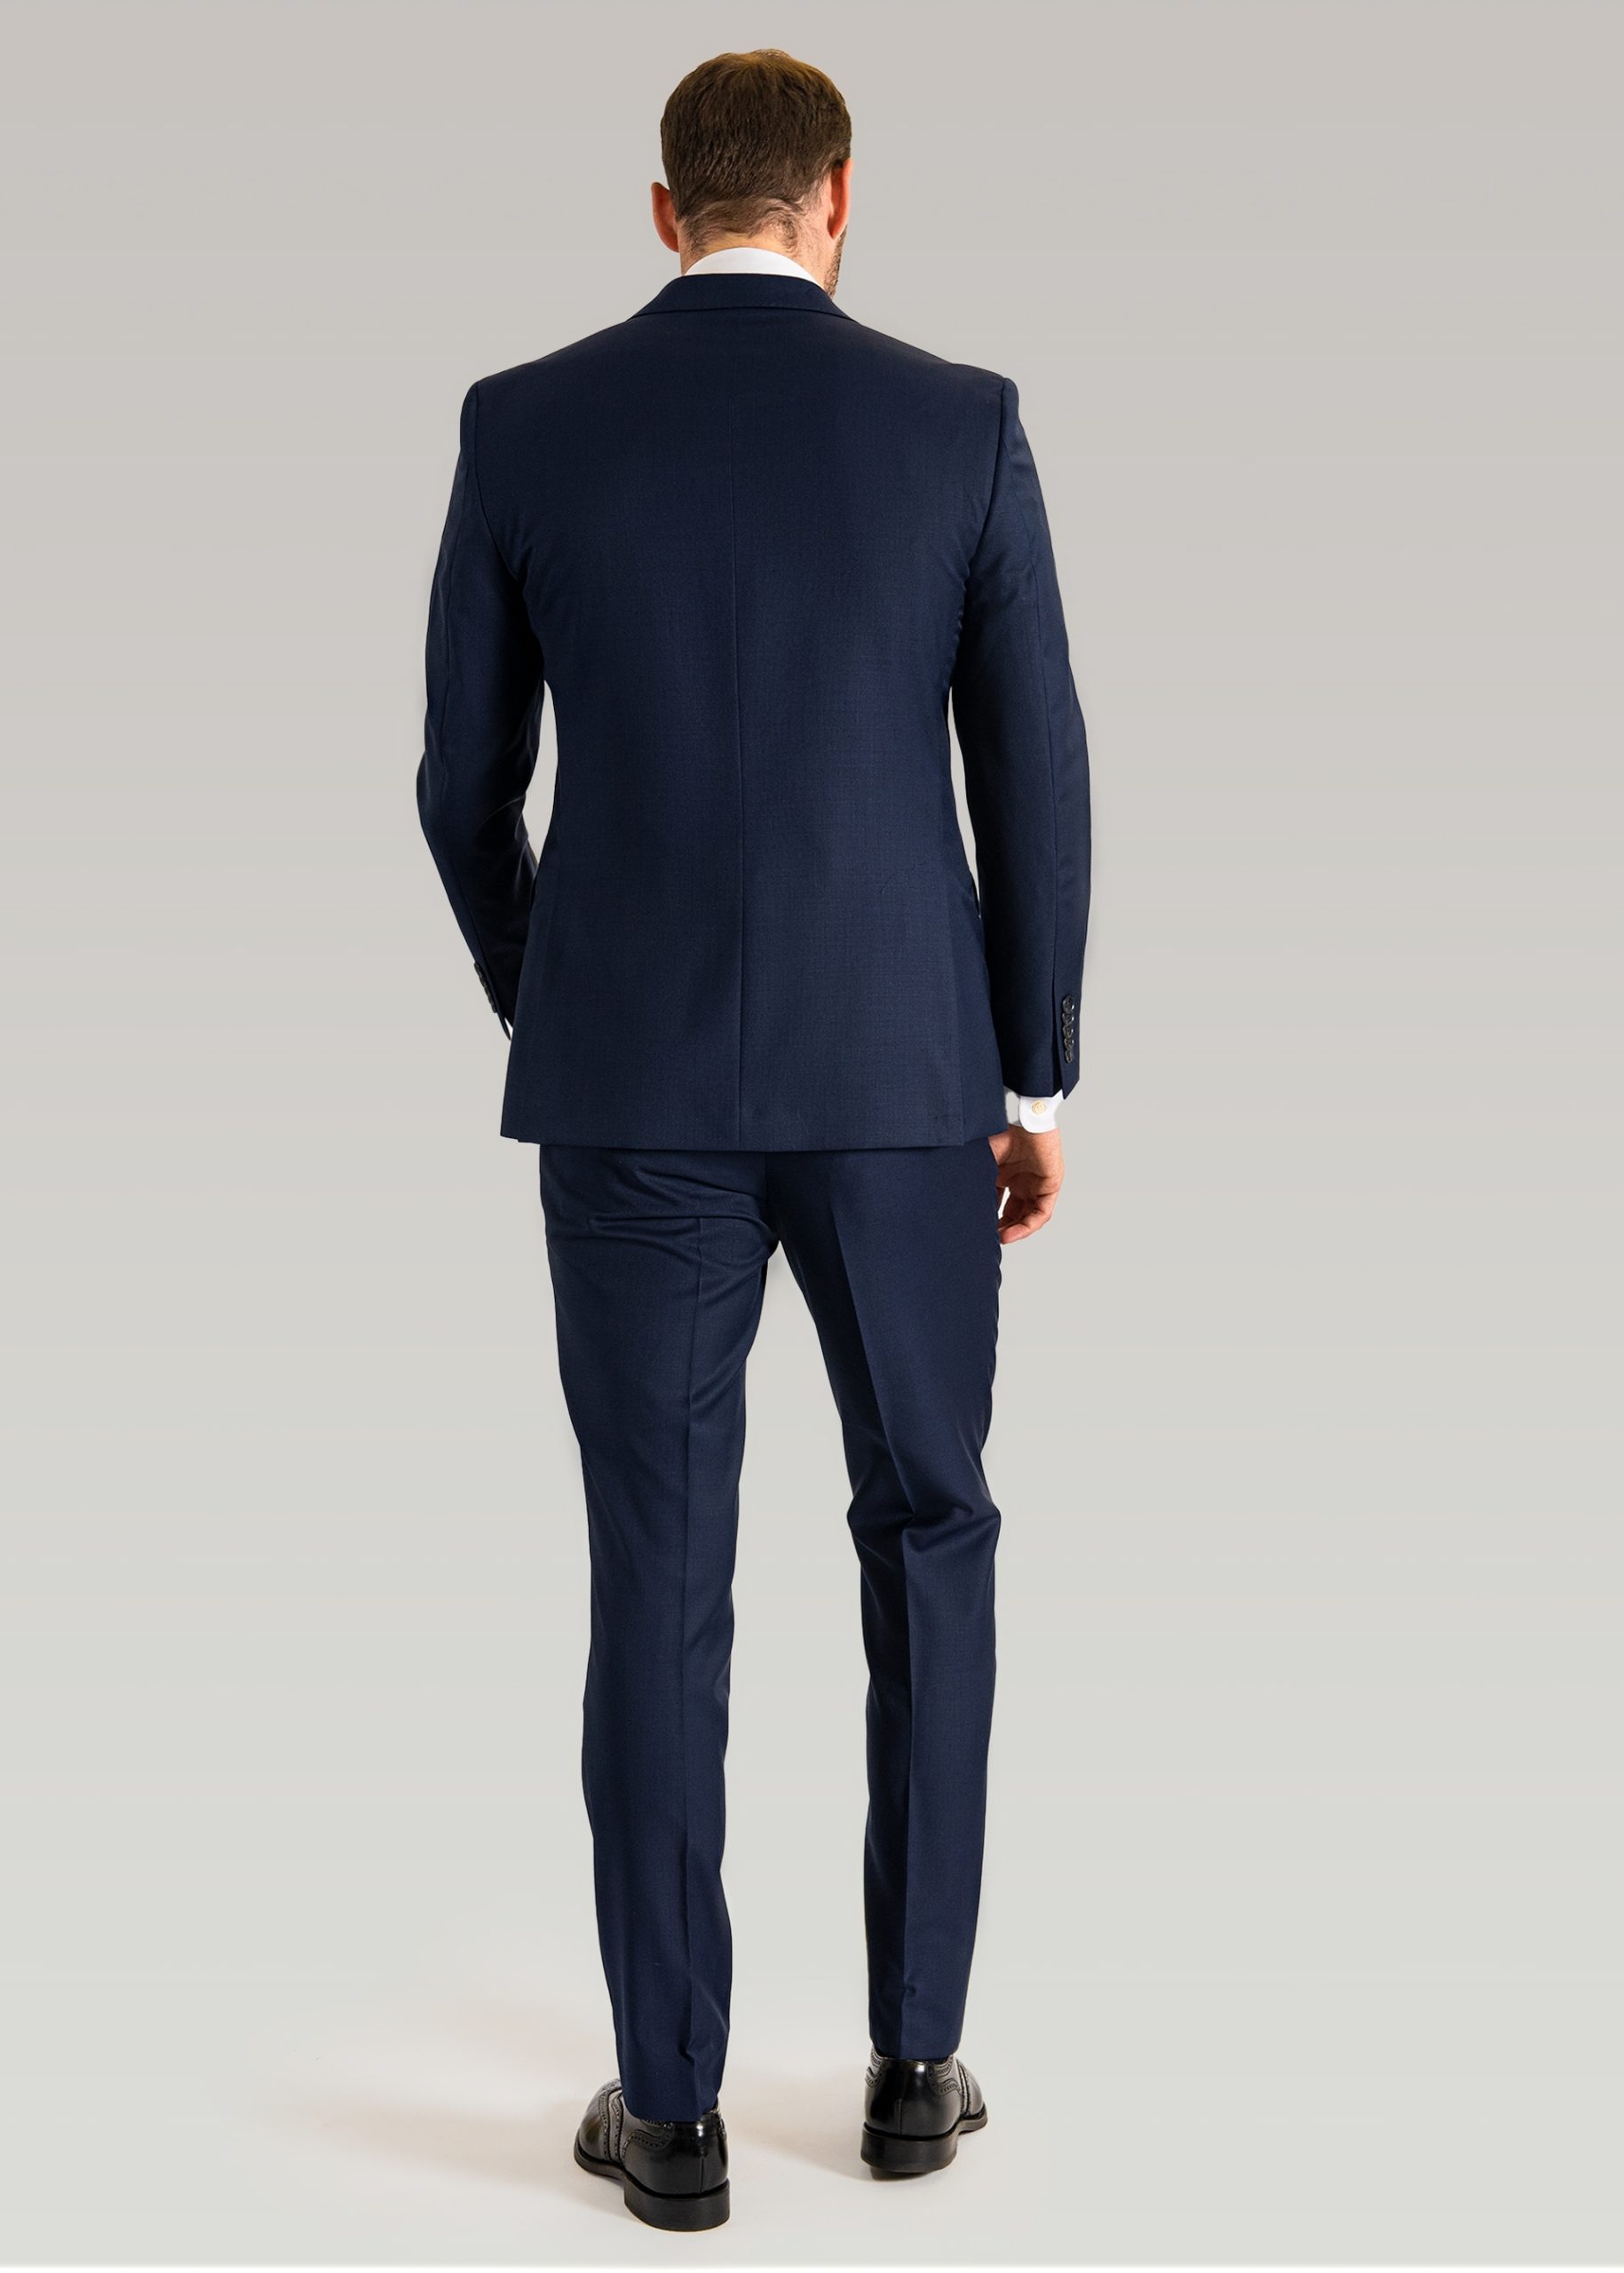 Tailored fit navy blue suit